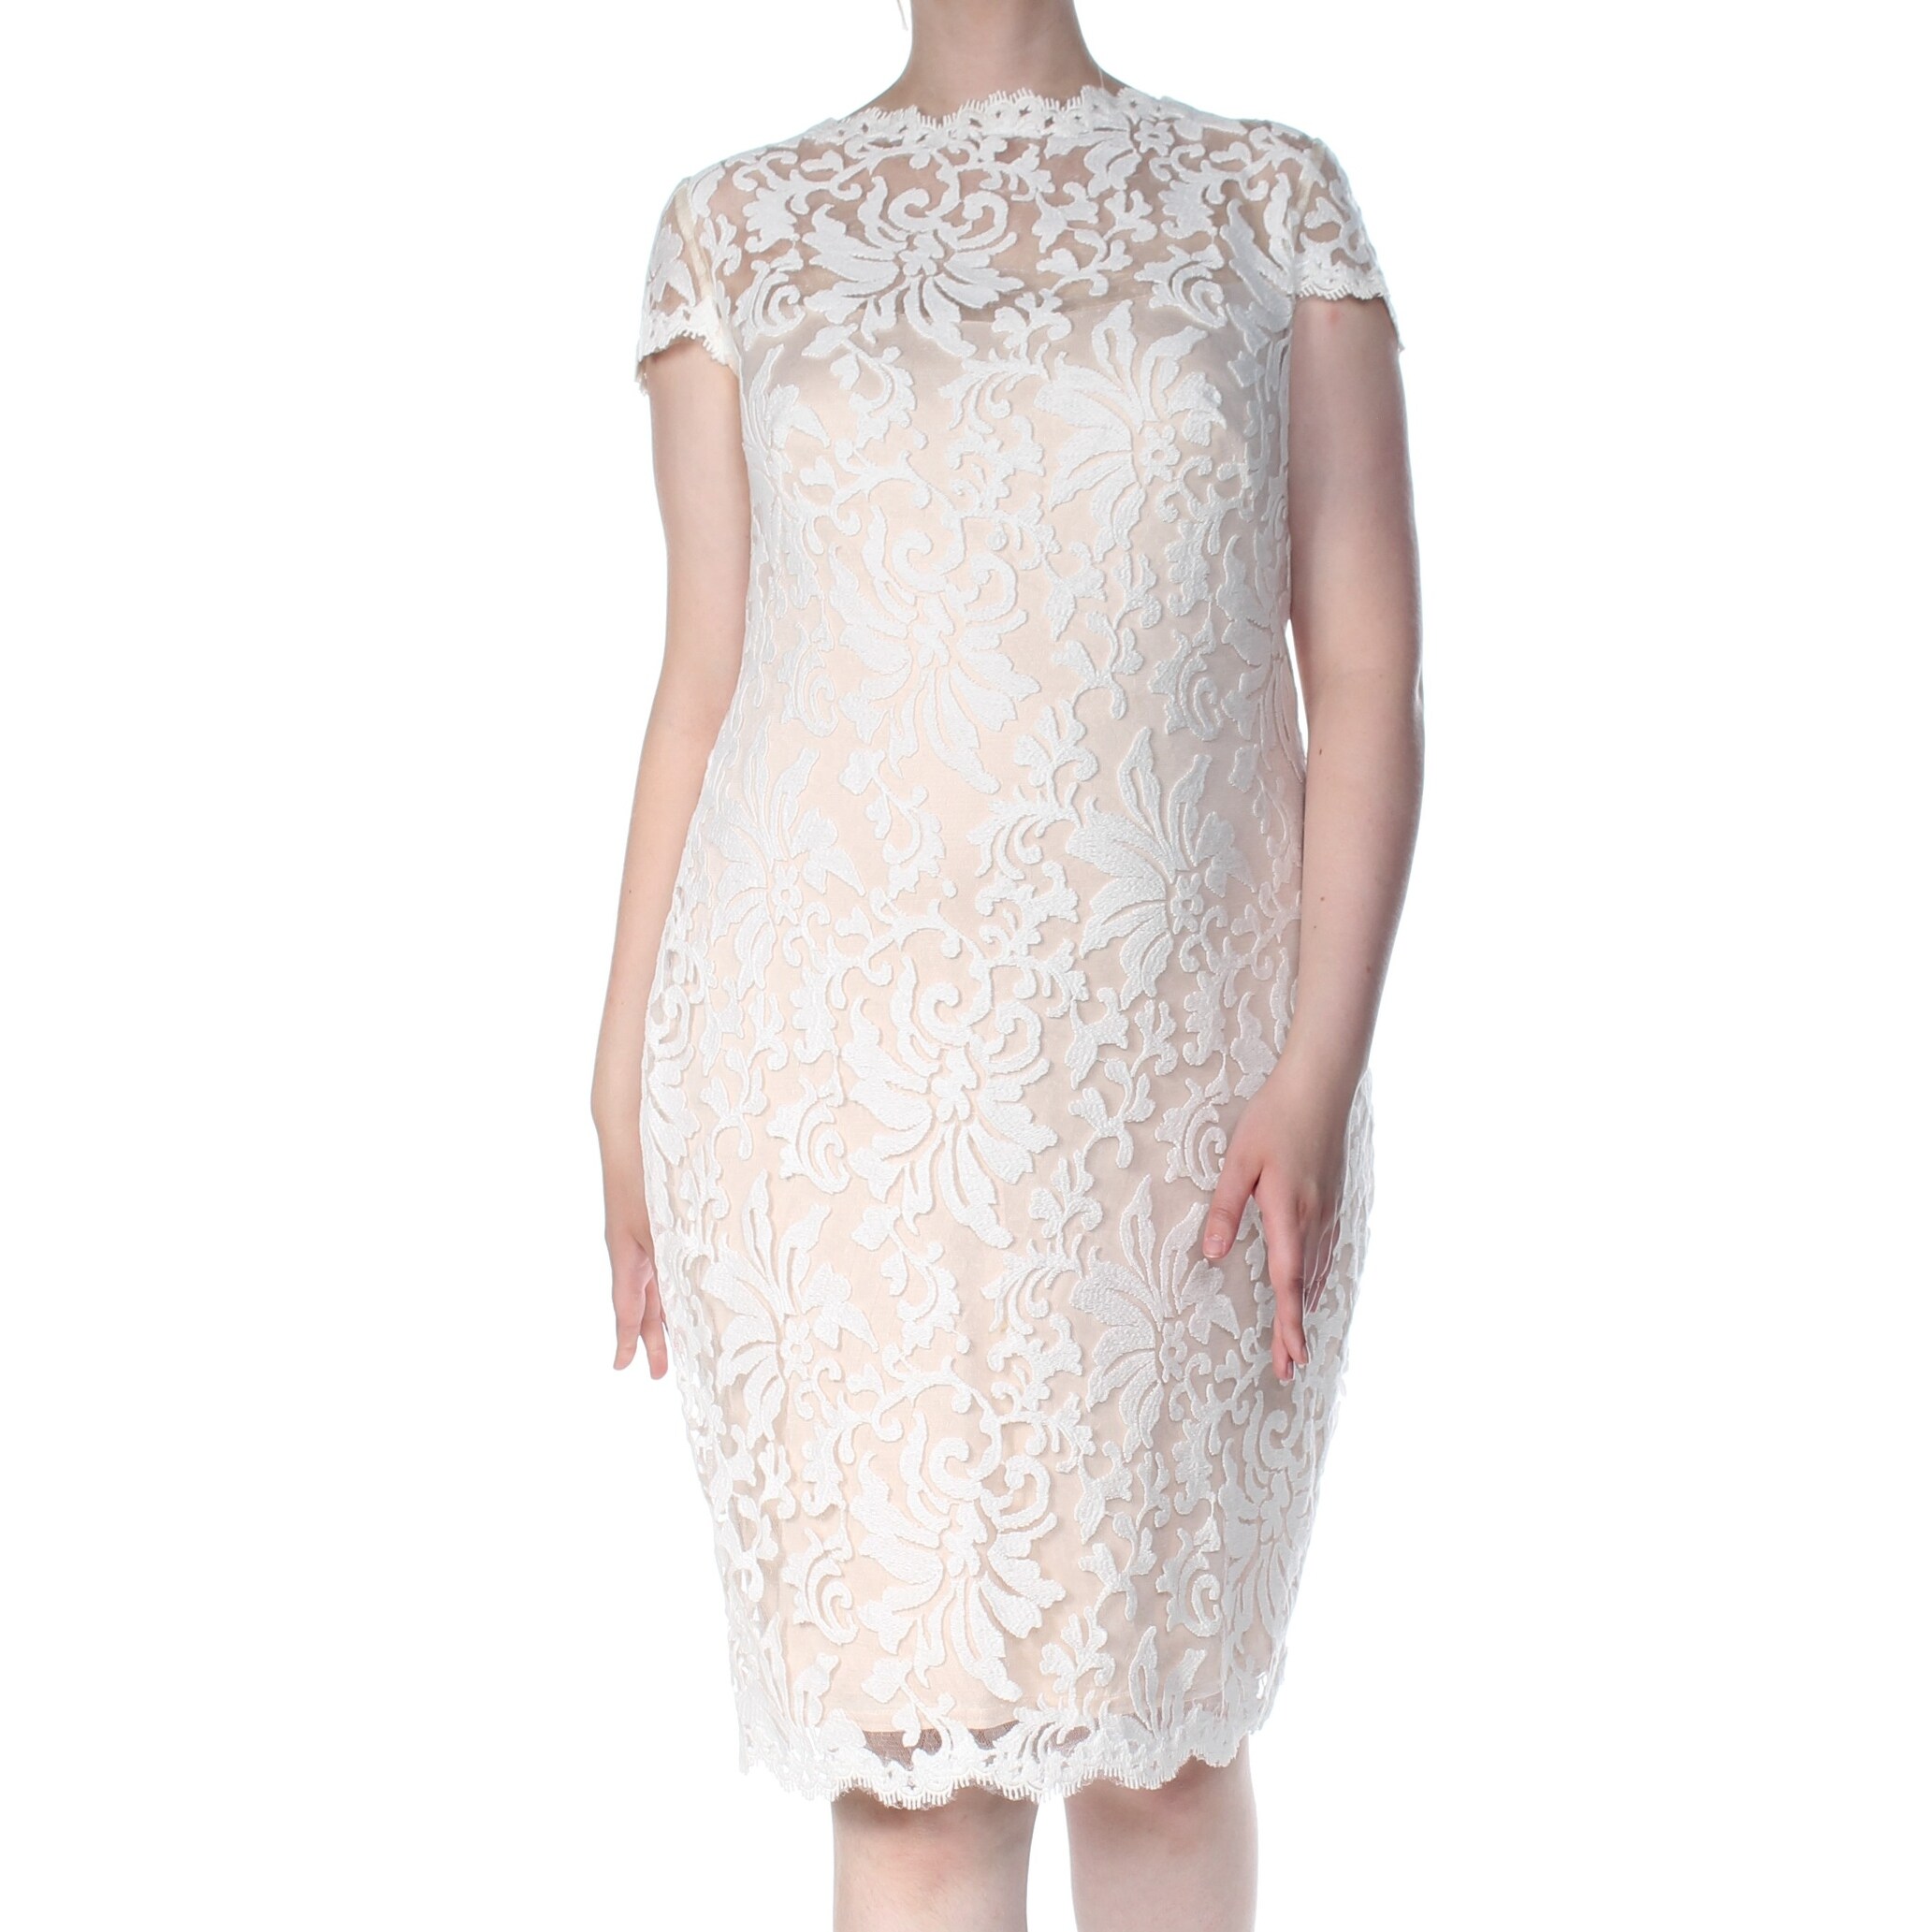 white lace dress size 16